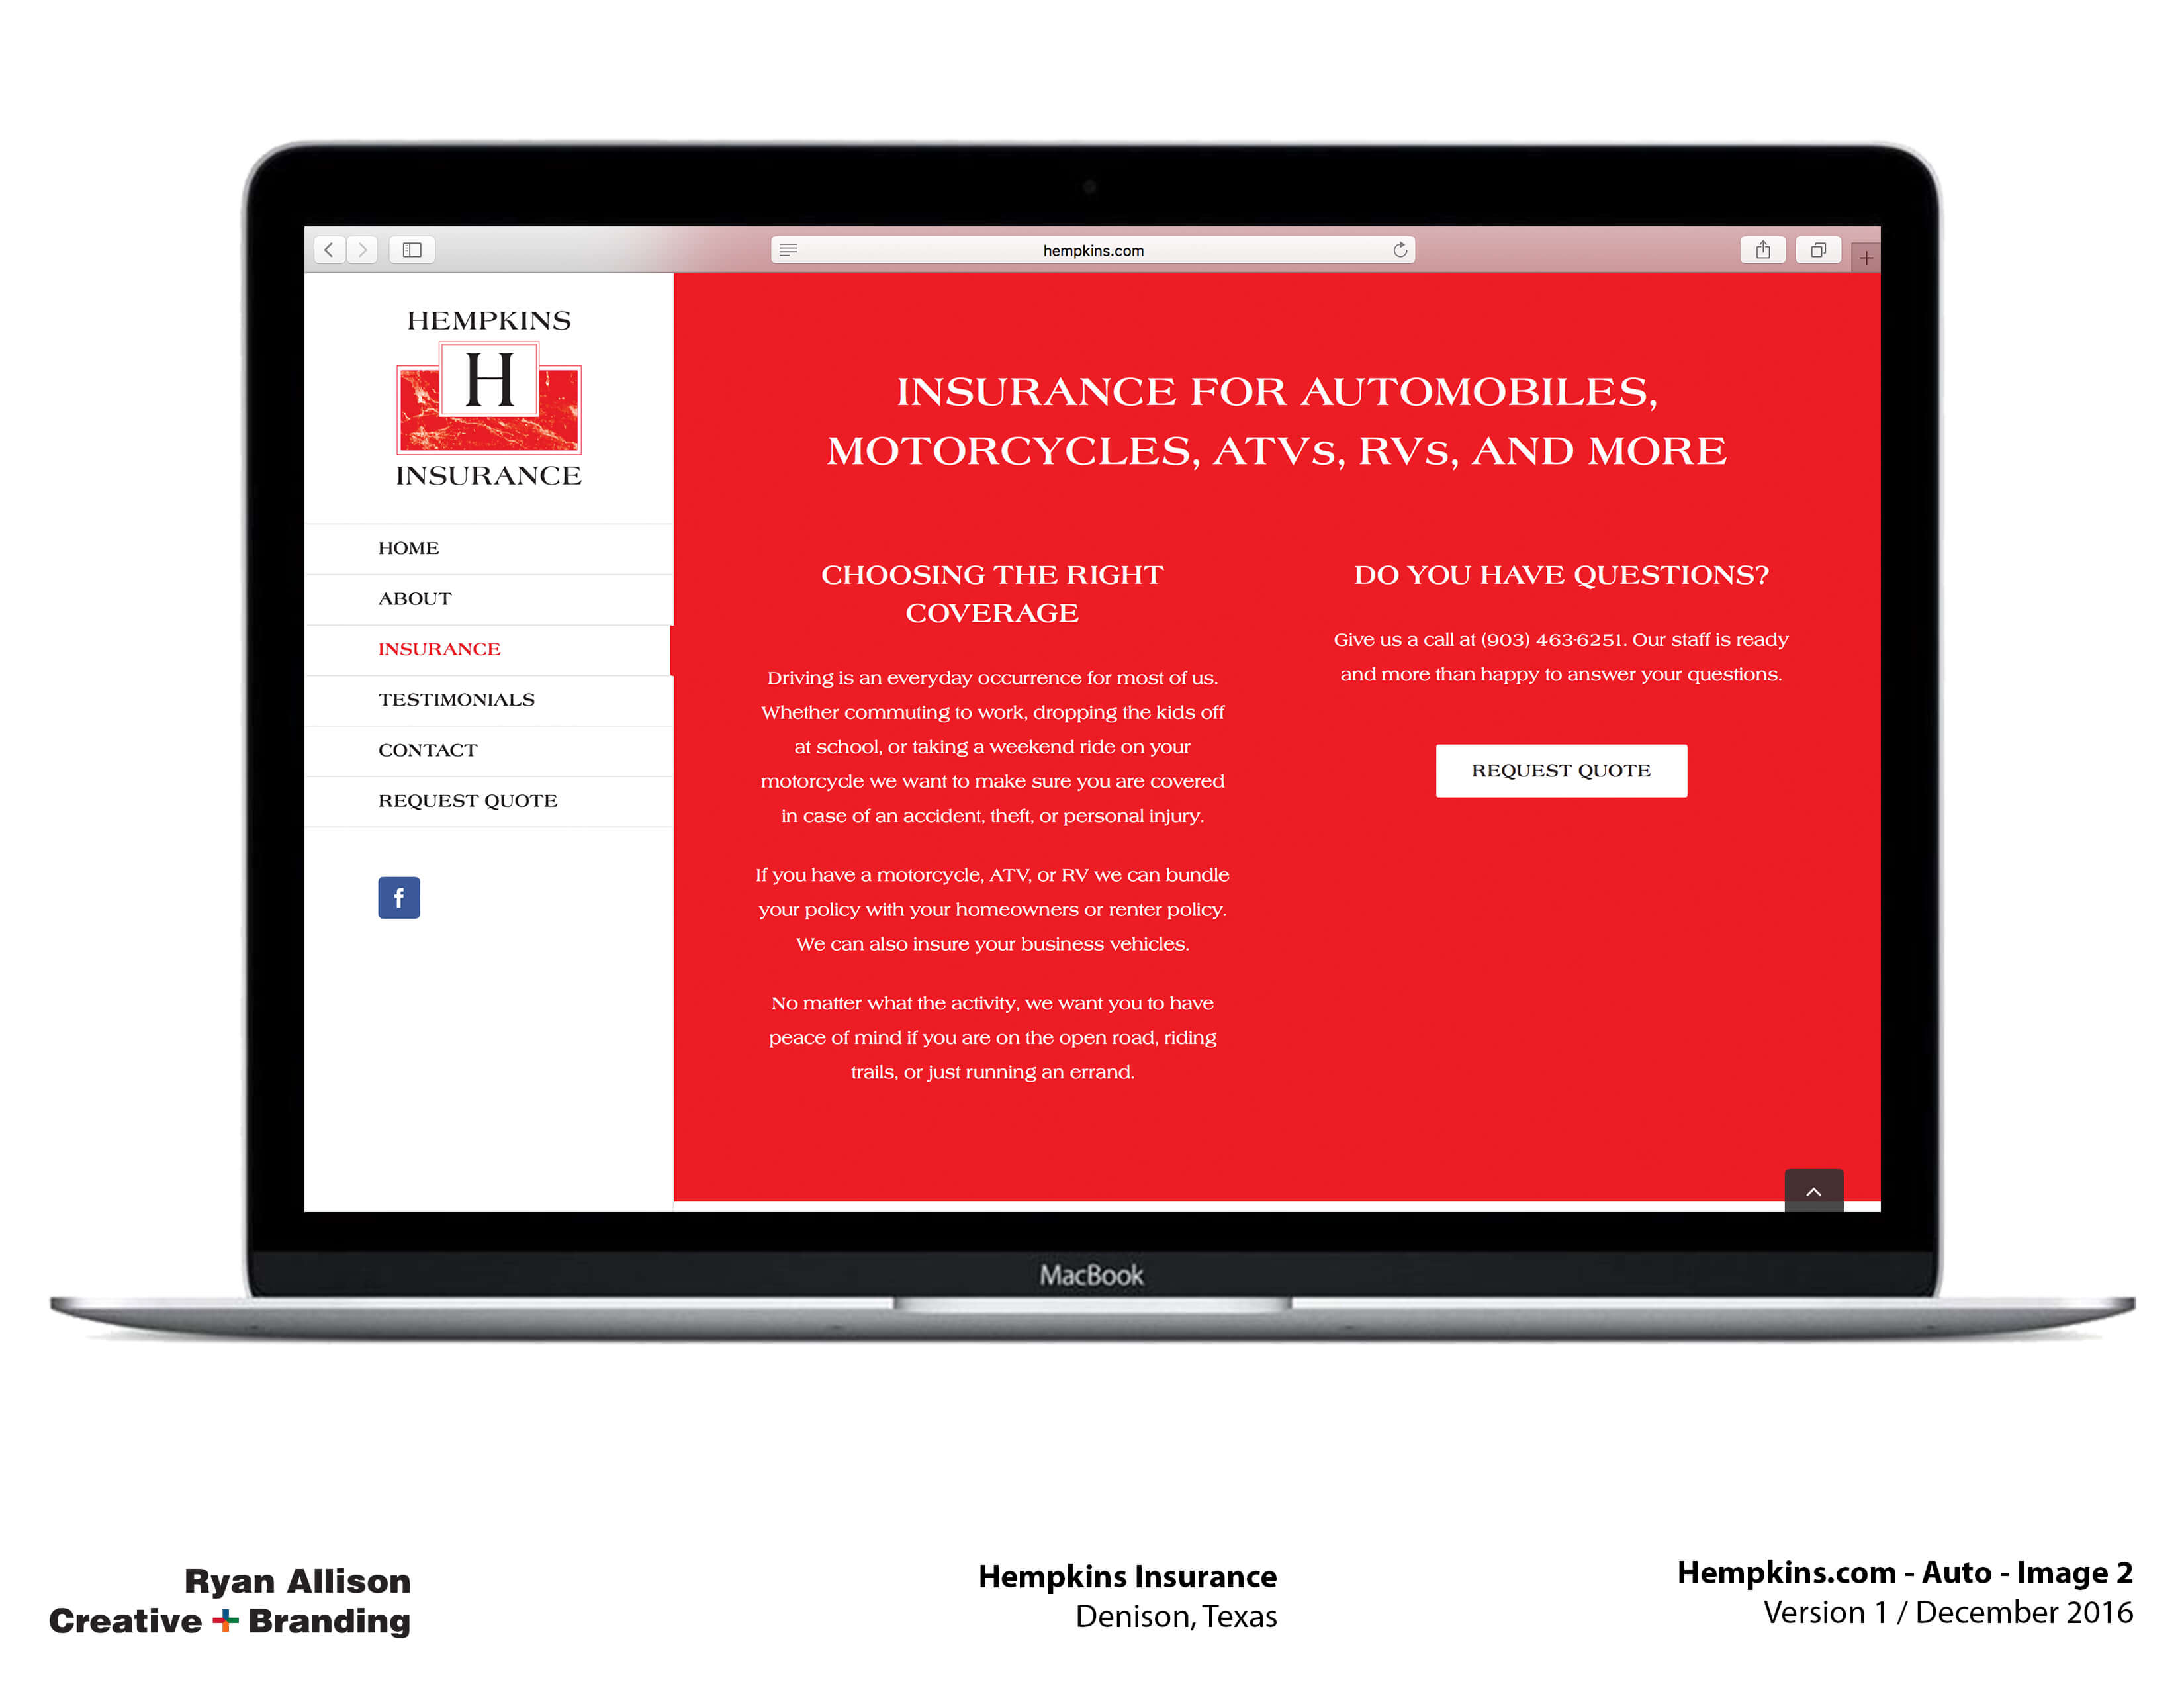 Hempkins Insurance Website Auto 2 - Project - Ryan Allison Creative + Branding